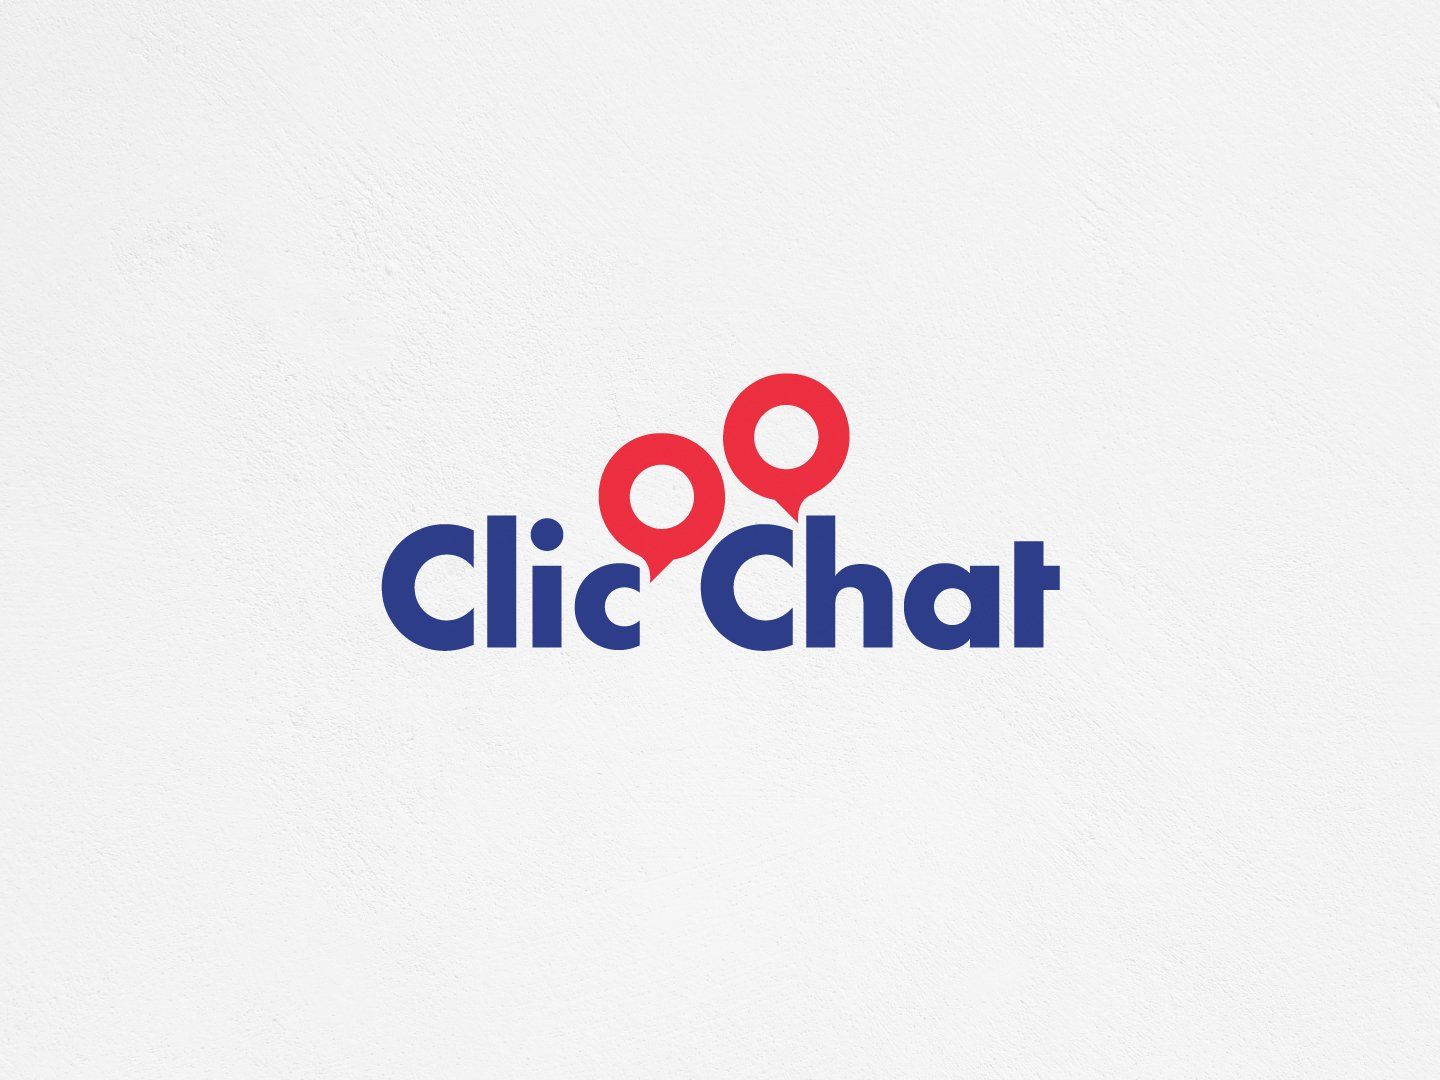 Clic Chat full colour logo